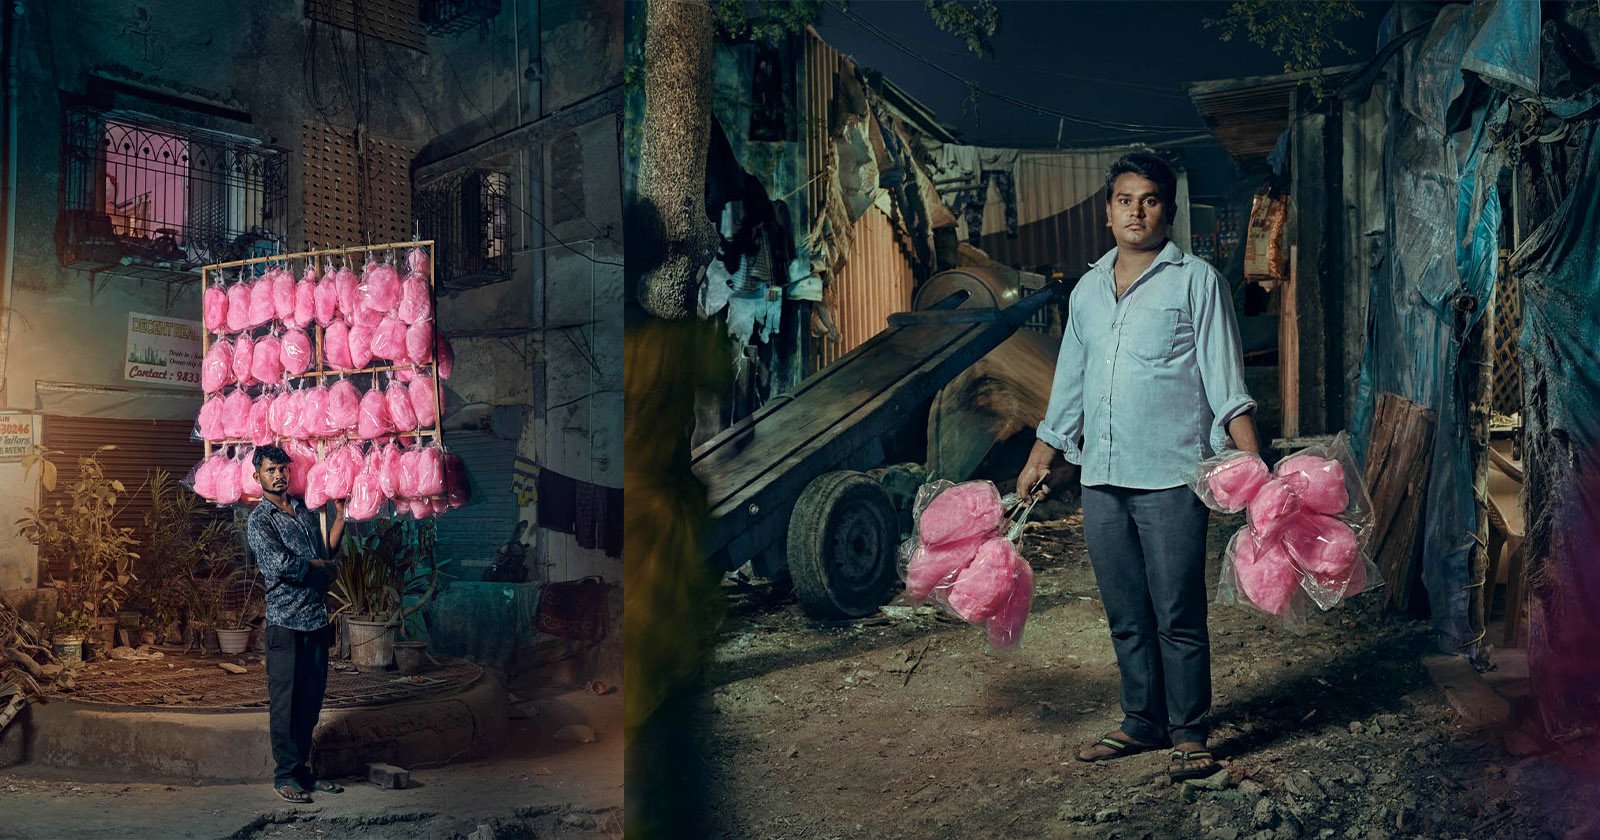 Striking Nighttime Portraits of Mumbai’s Cotton Candy Men